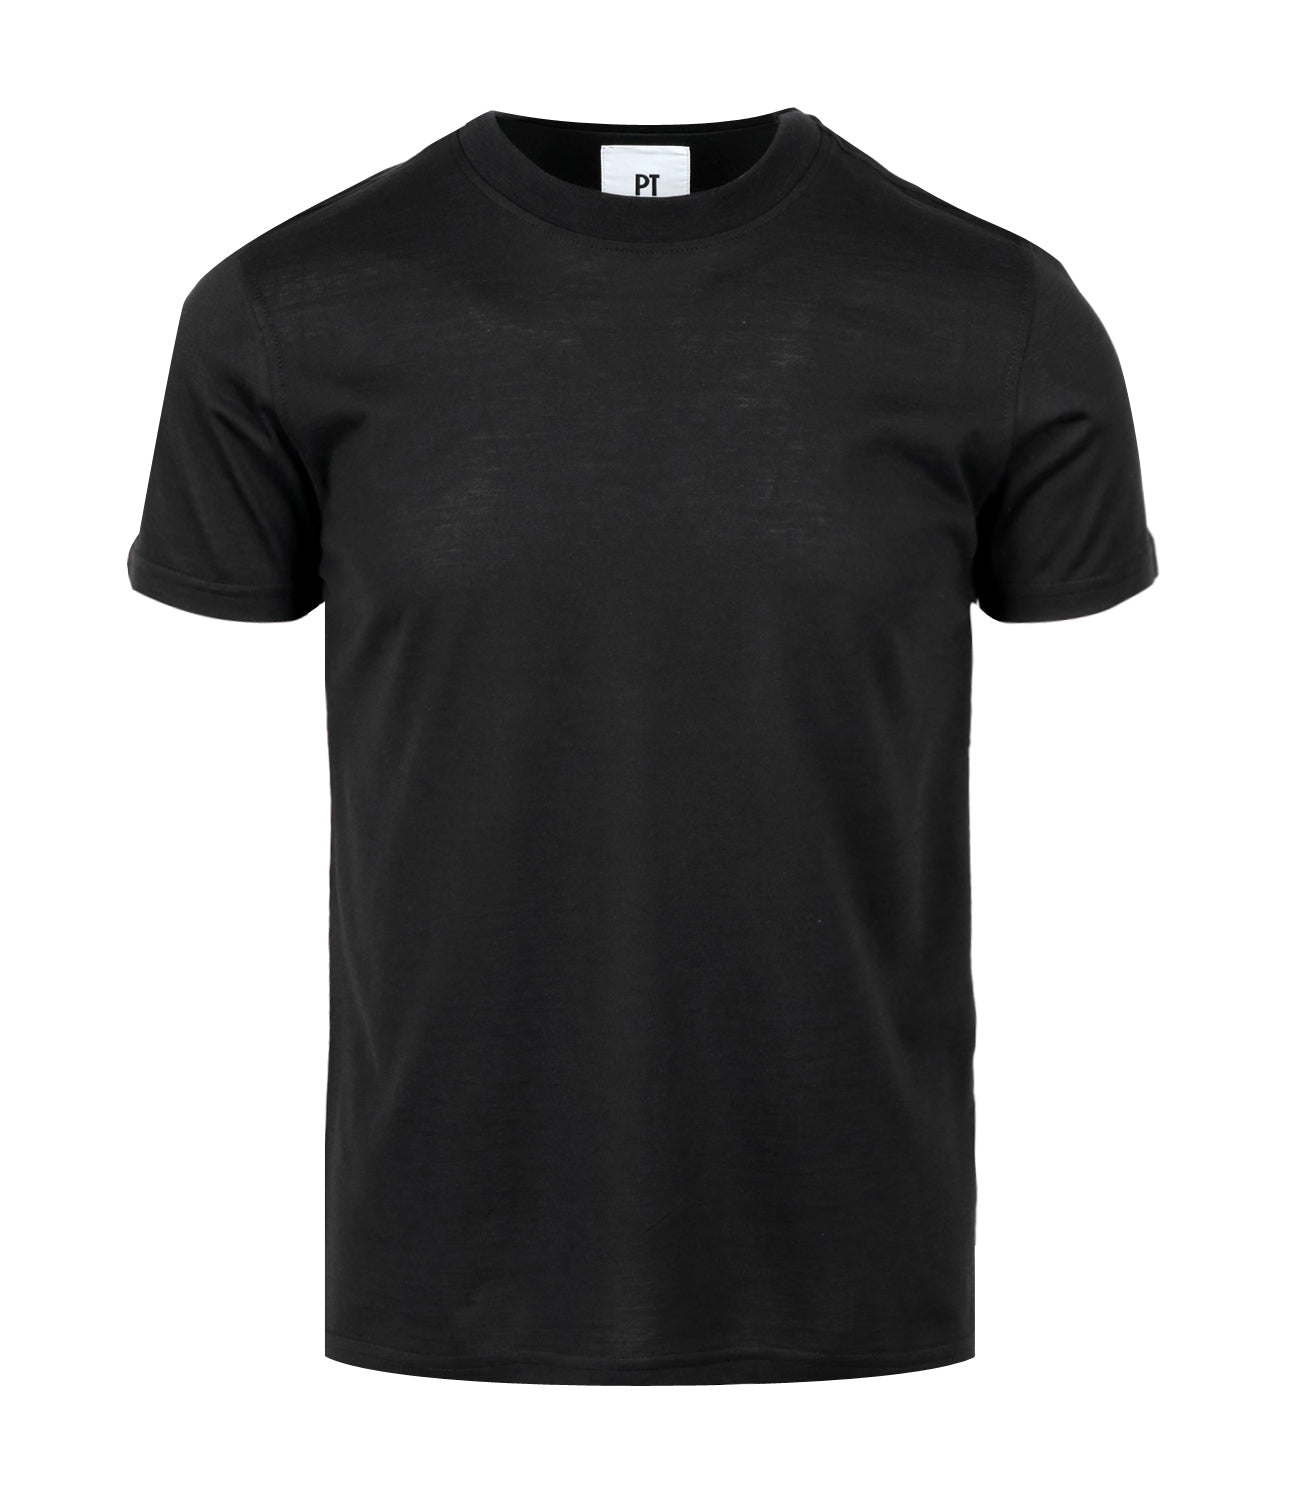 PT Torino | Black T-Shirt